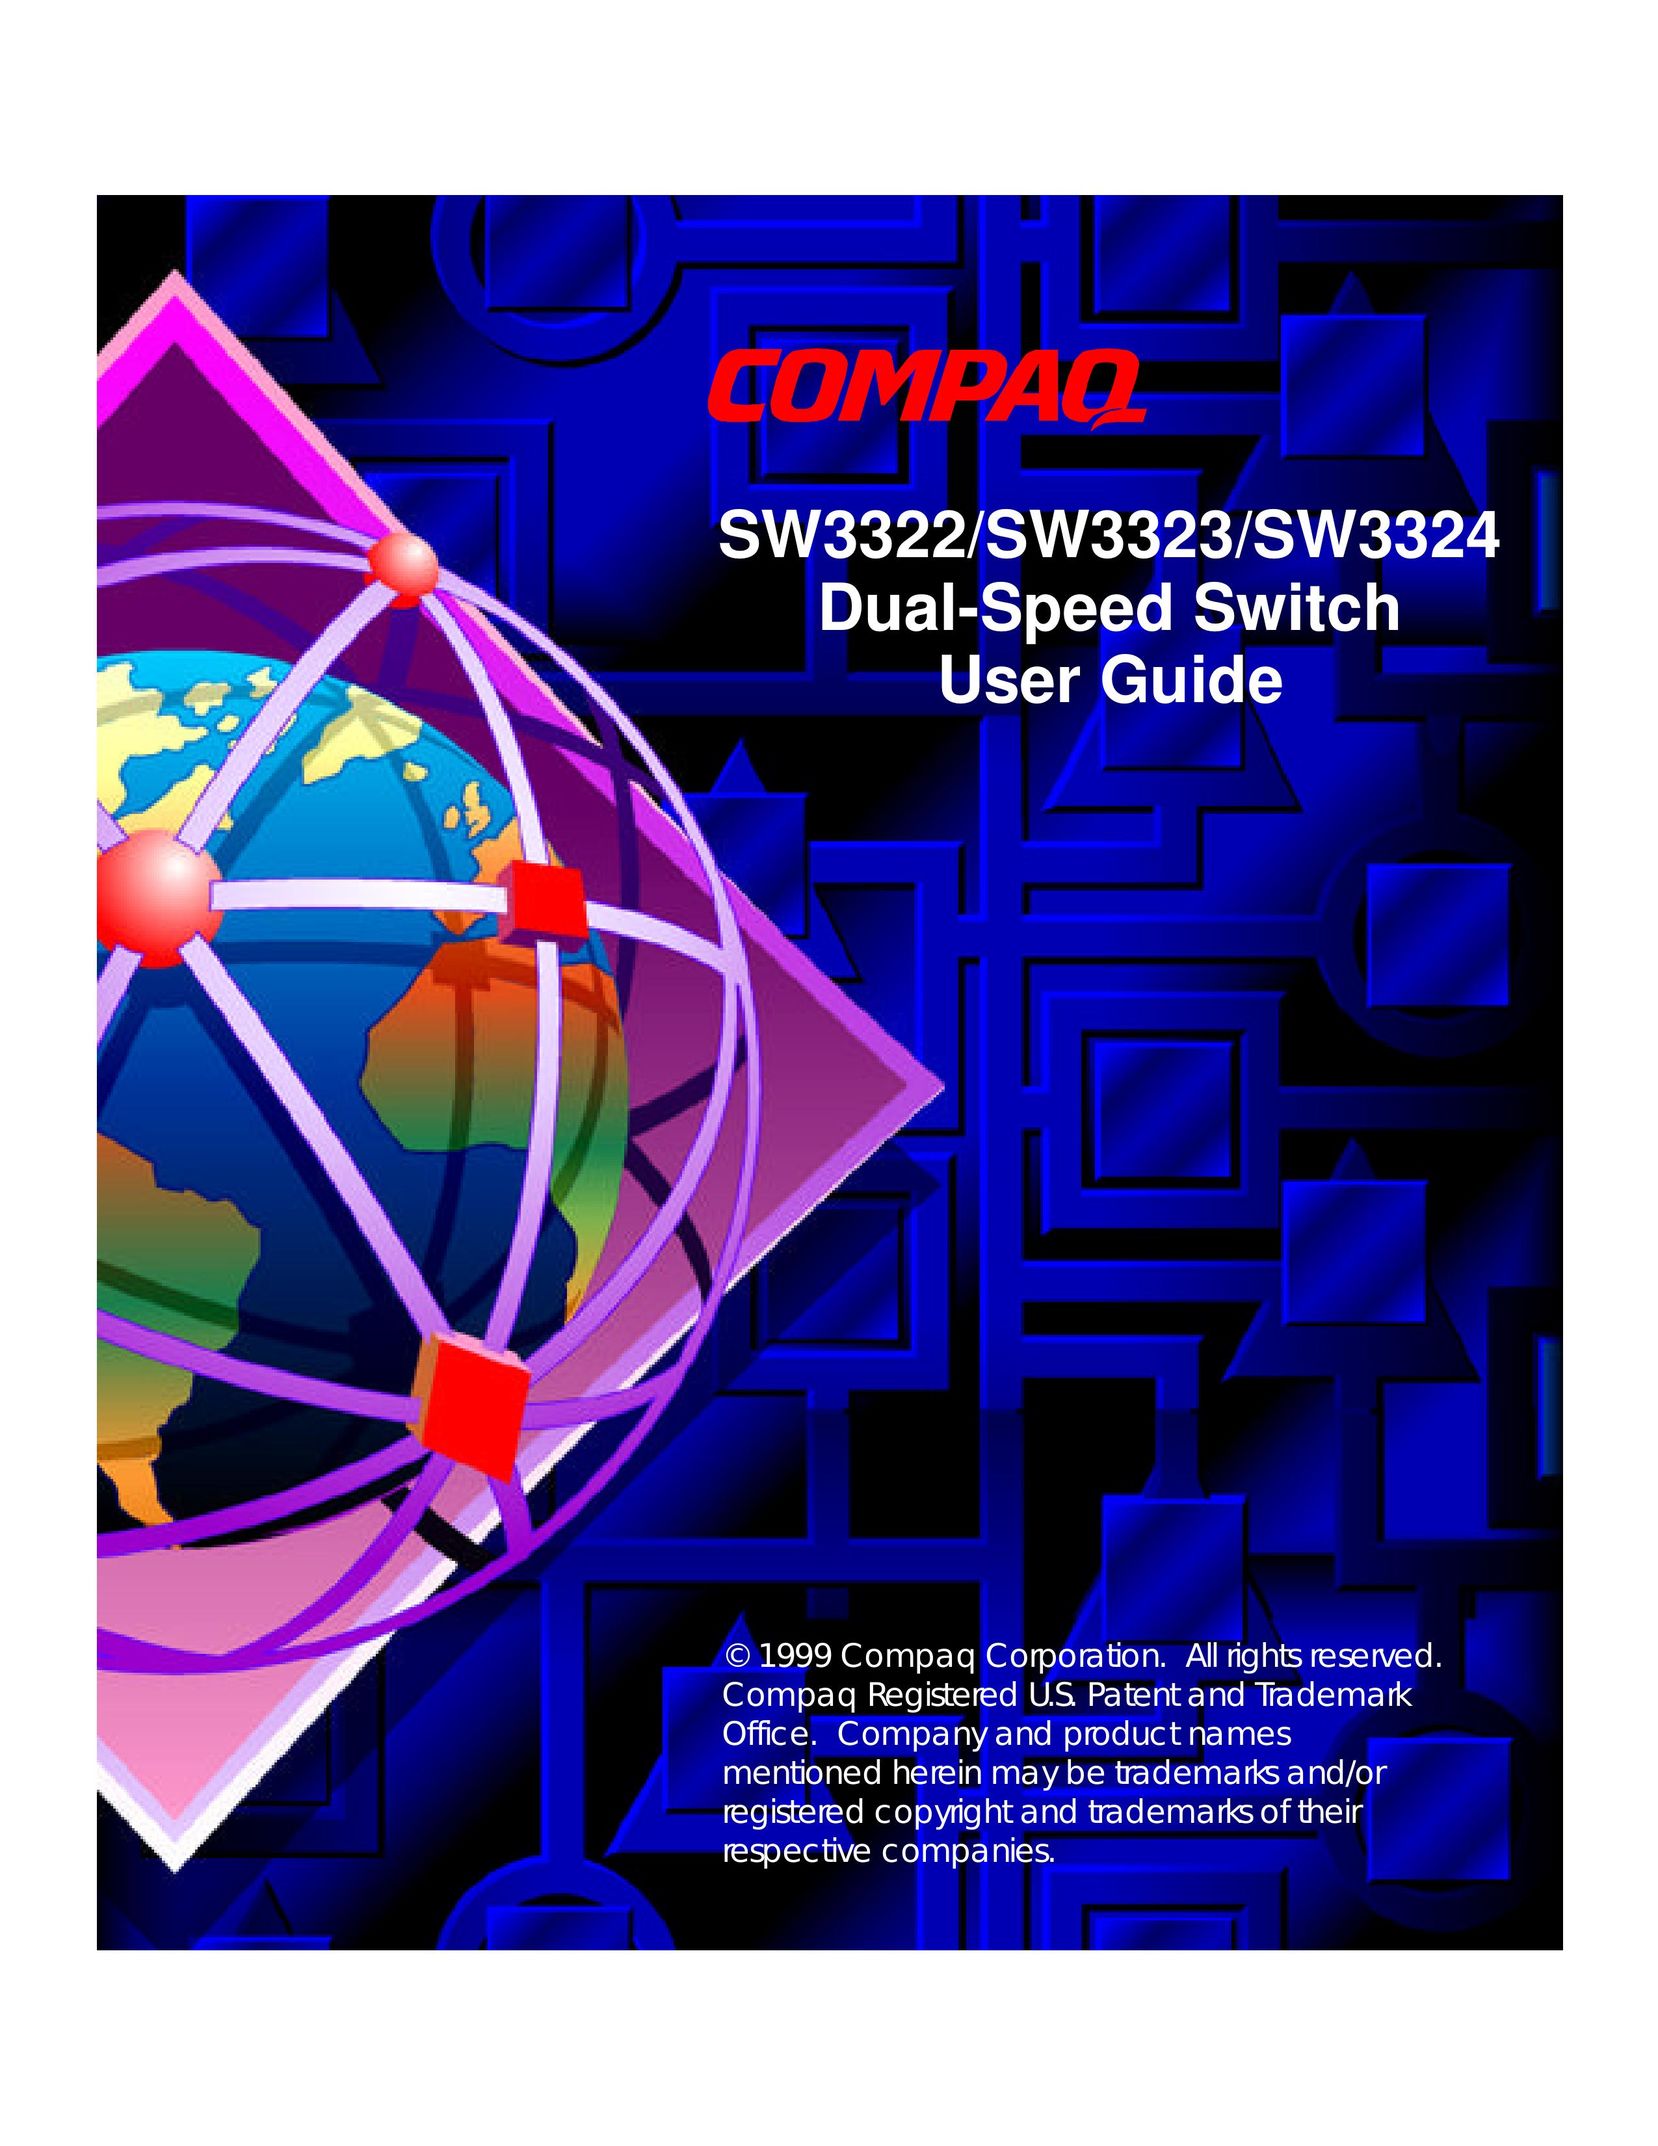 Compaq SW3323 Switch User Manual